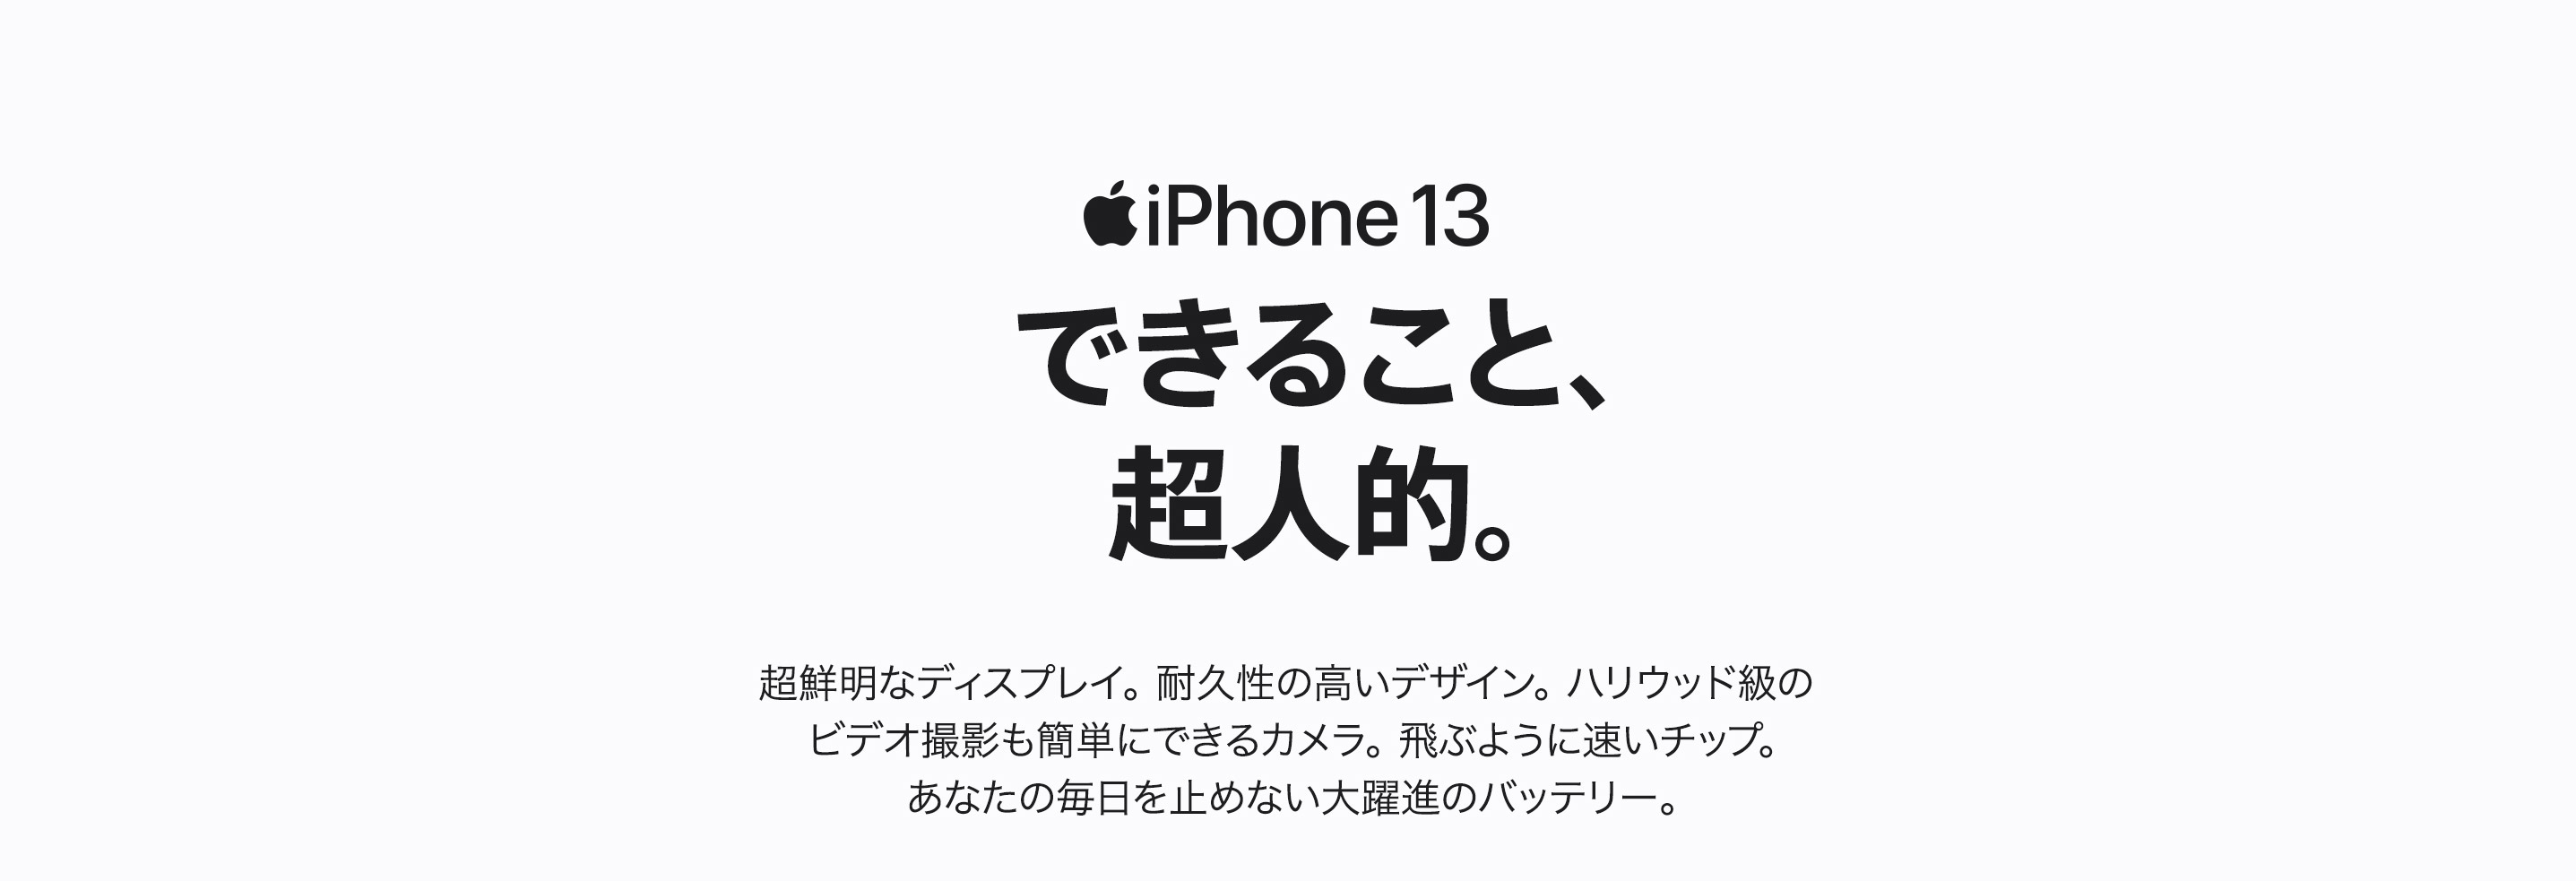 iPhone 13・iPhone 13 mini